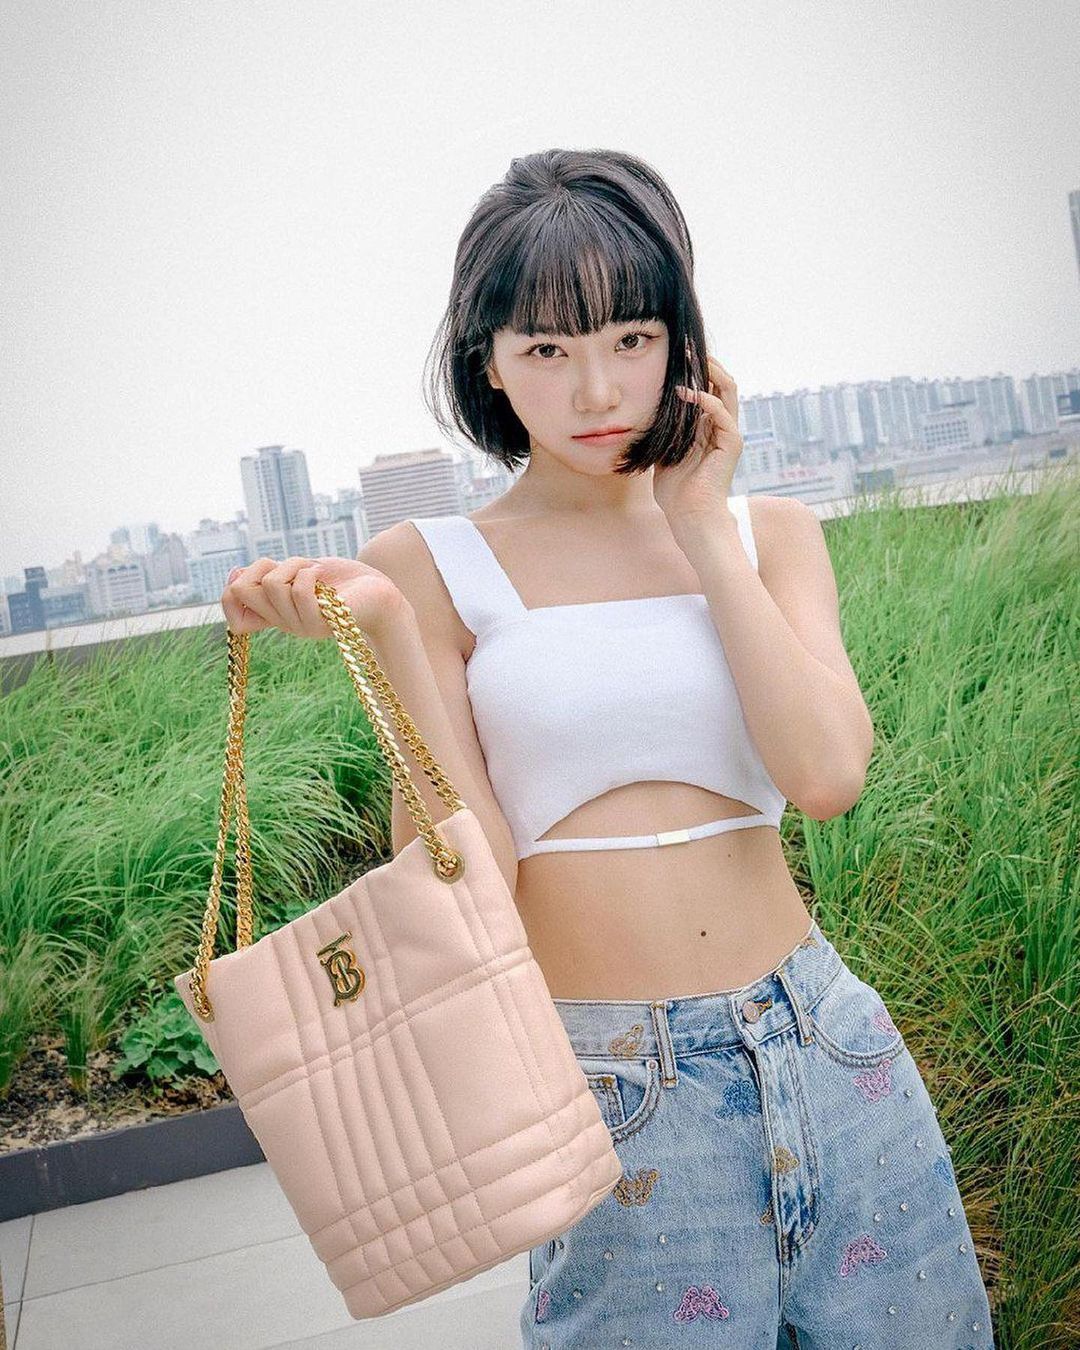 Le Sserafim Kim Chae-won's unrelenting exposure.. Lovely pose with luxury bag